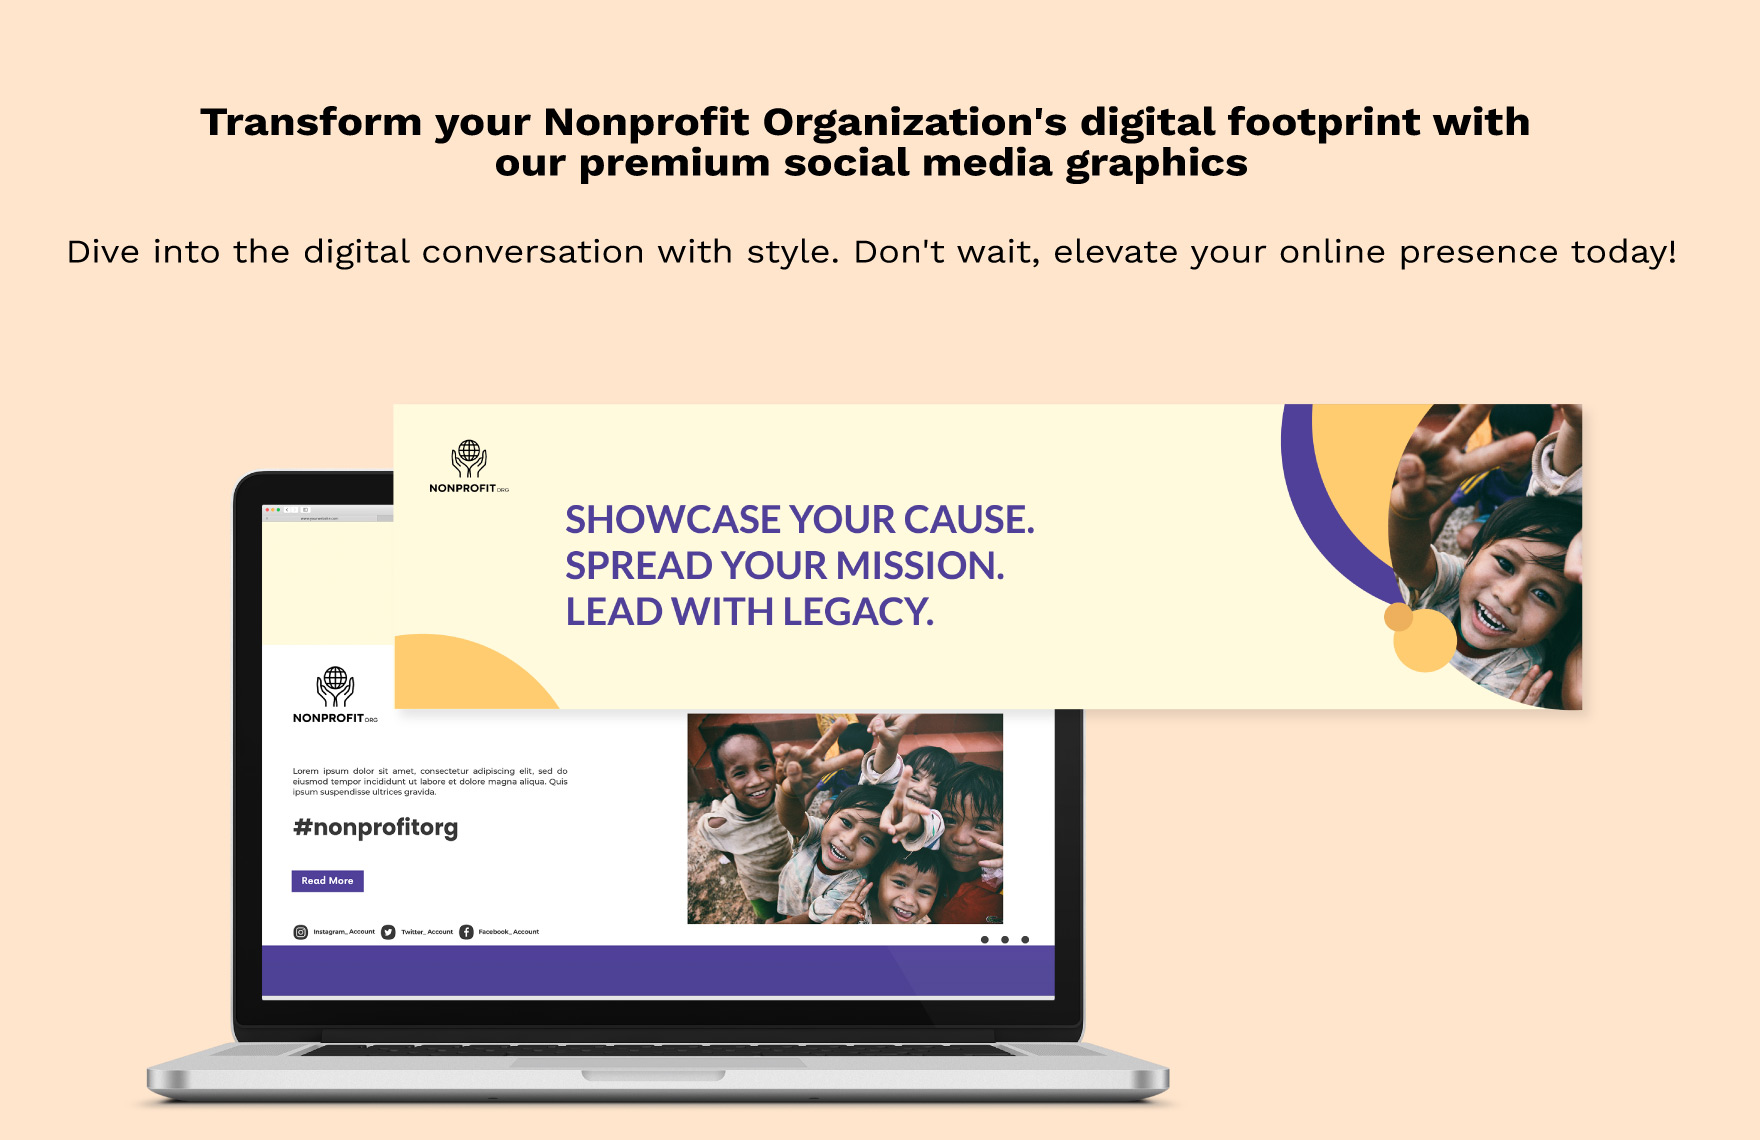 Nonprofit Organization Website Header Template